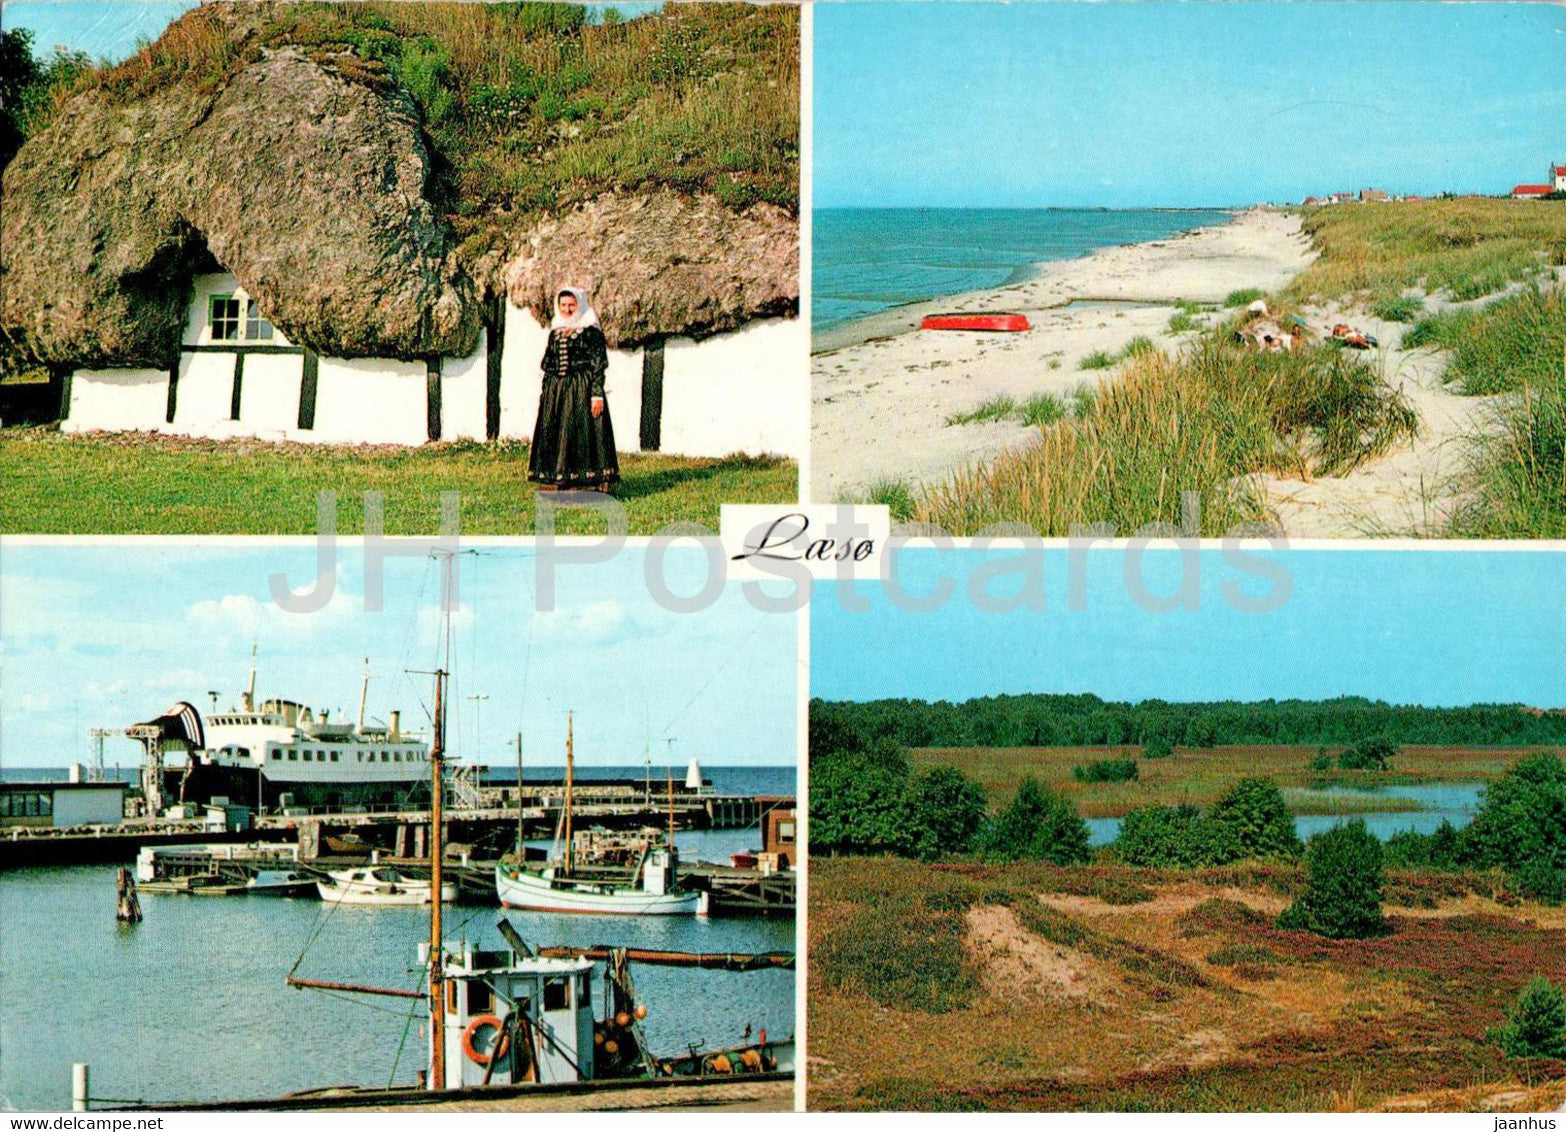 Laeso - Gl Tanggaard - Vestero Havn - Folgaardsoen - boat - ship - multiview - 1980 - Denmark - used - JH Postcards